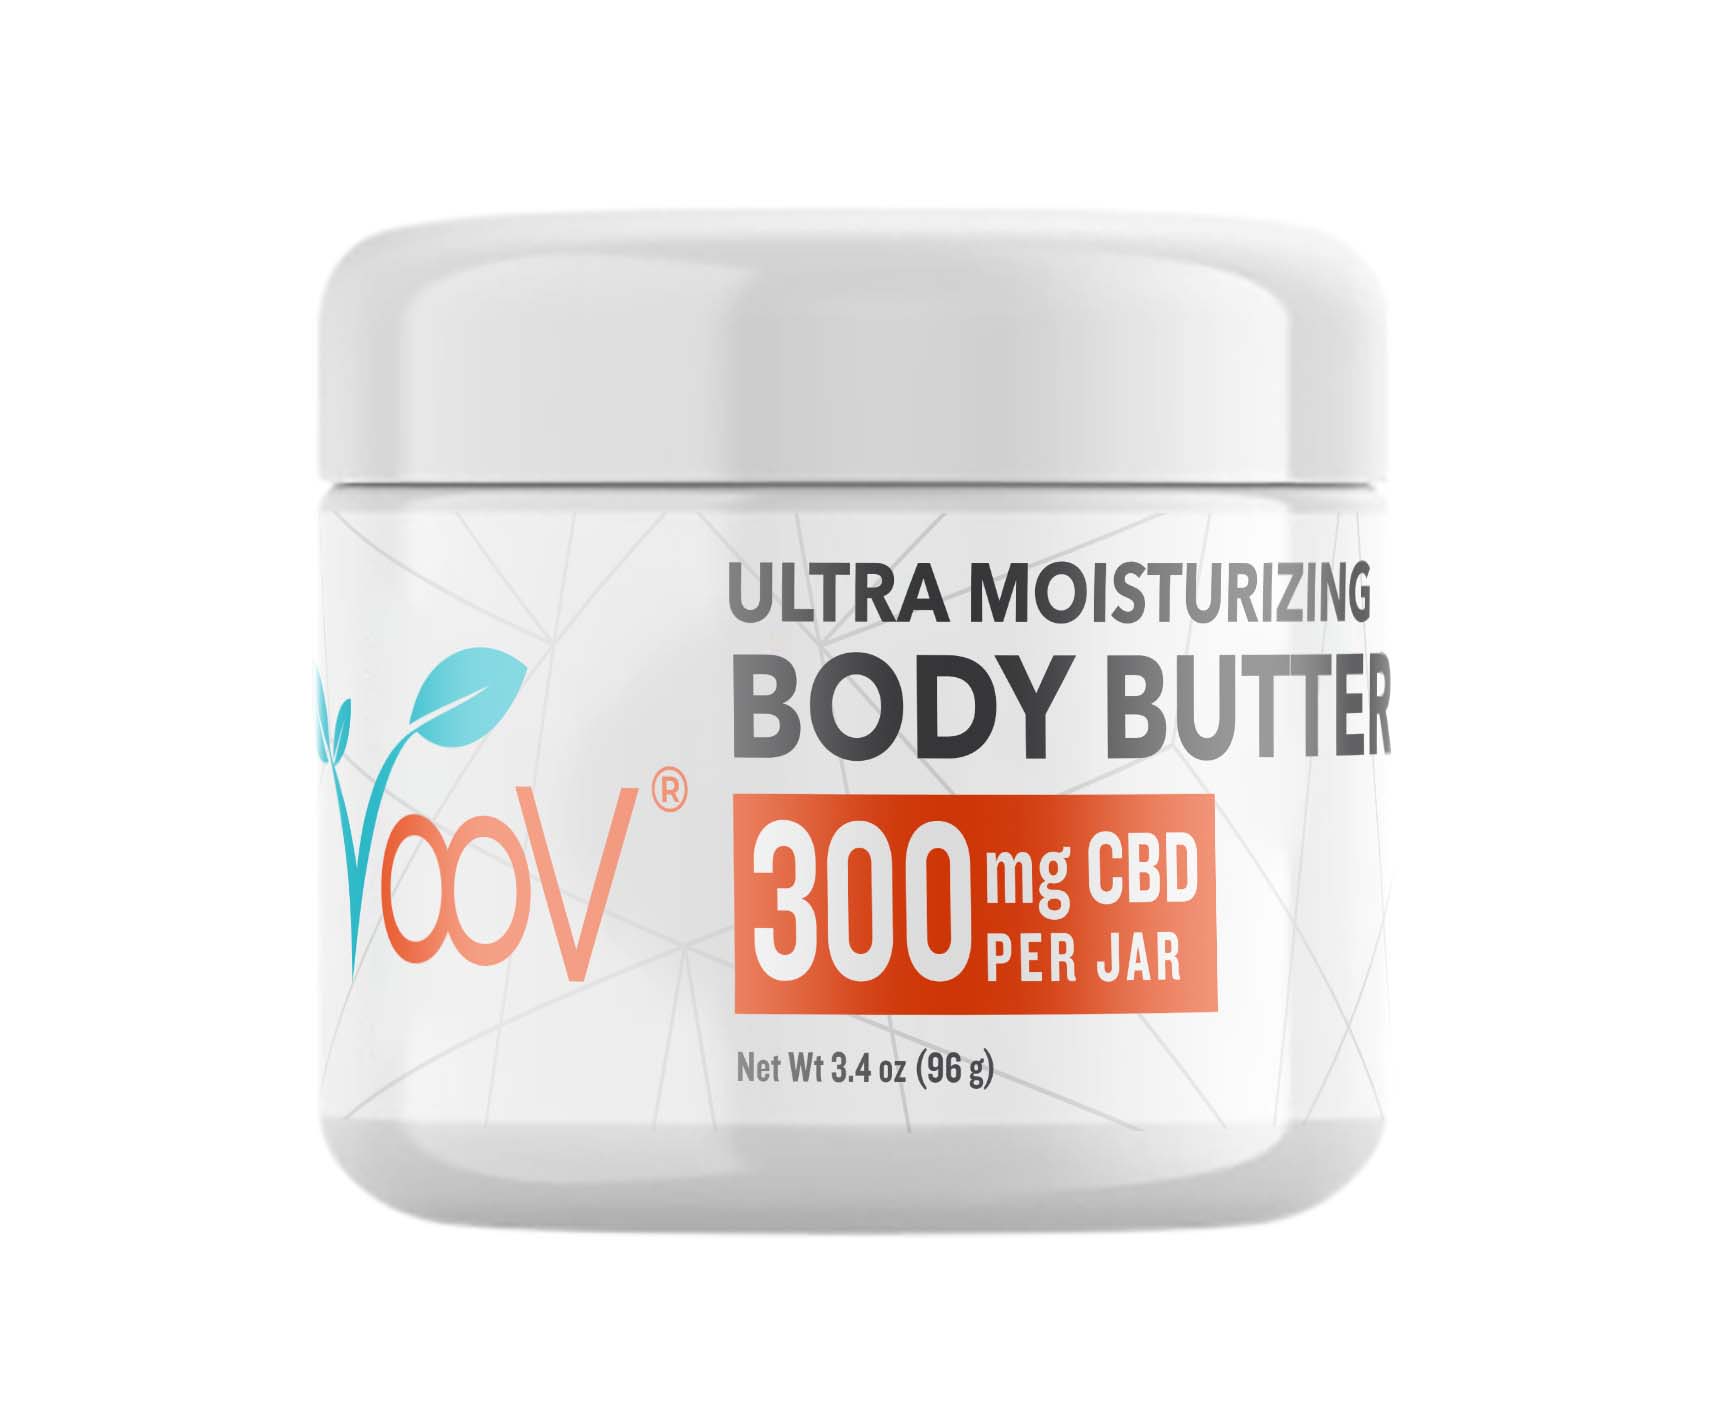 Voov Premium CBD Broad Spectrum Body Butter - 300mg